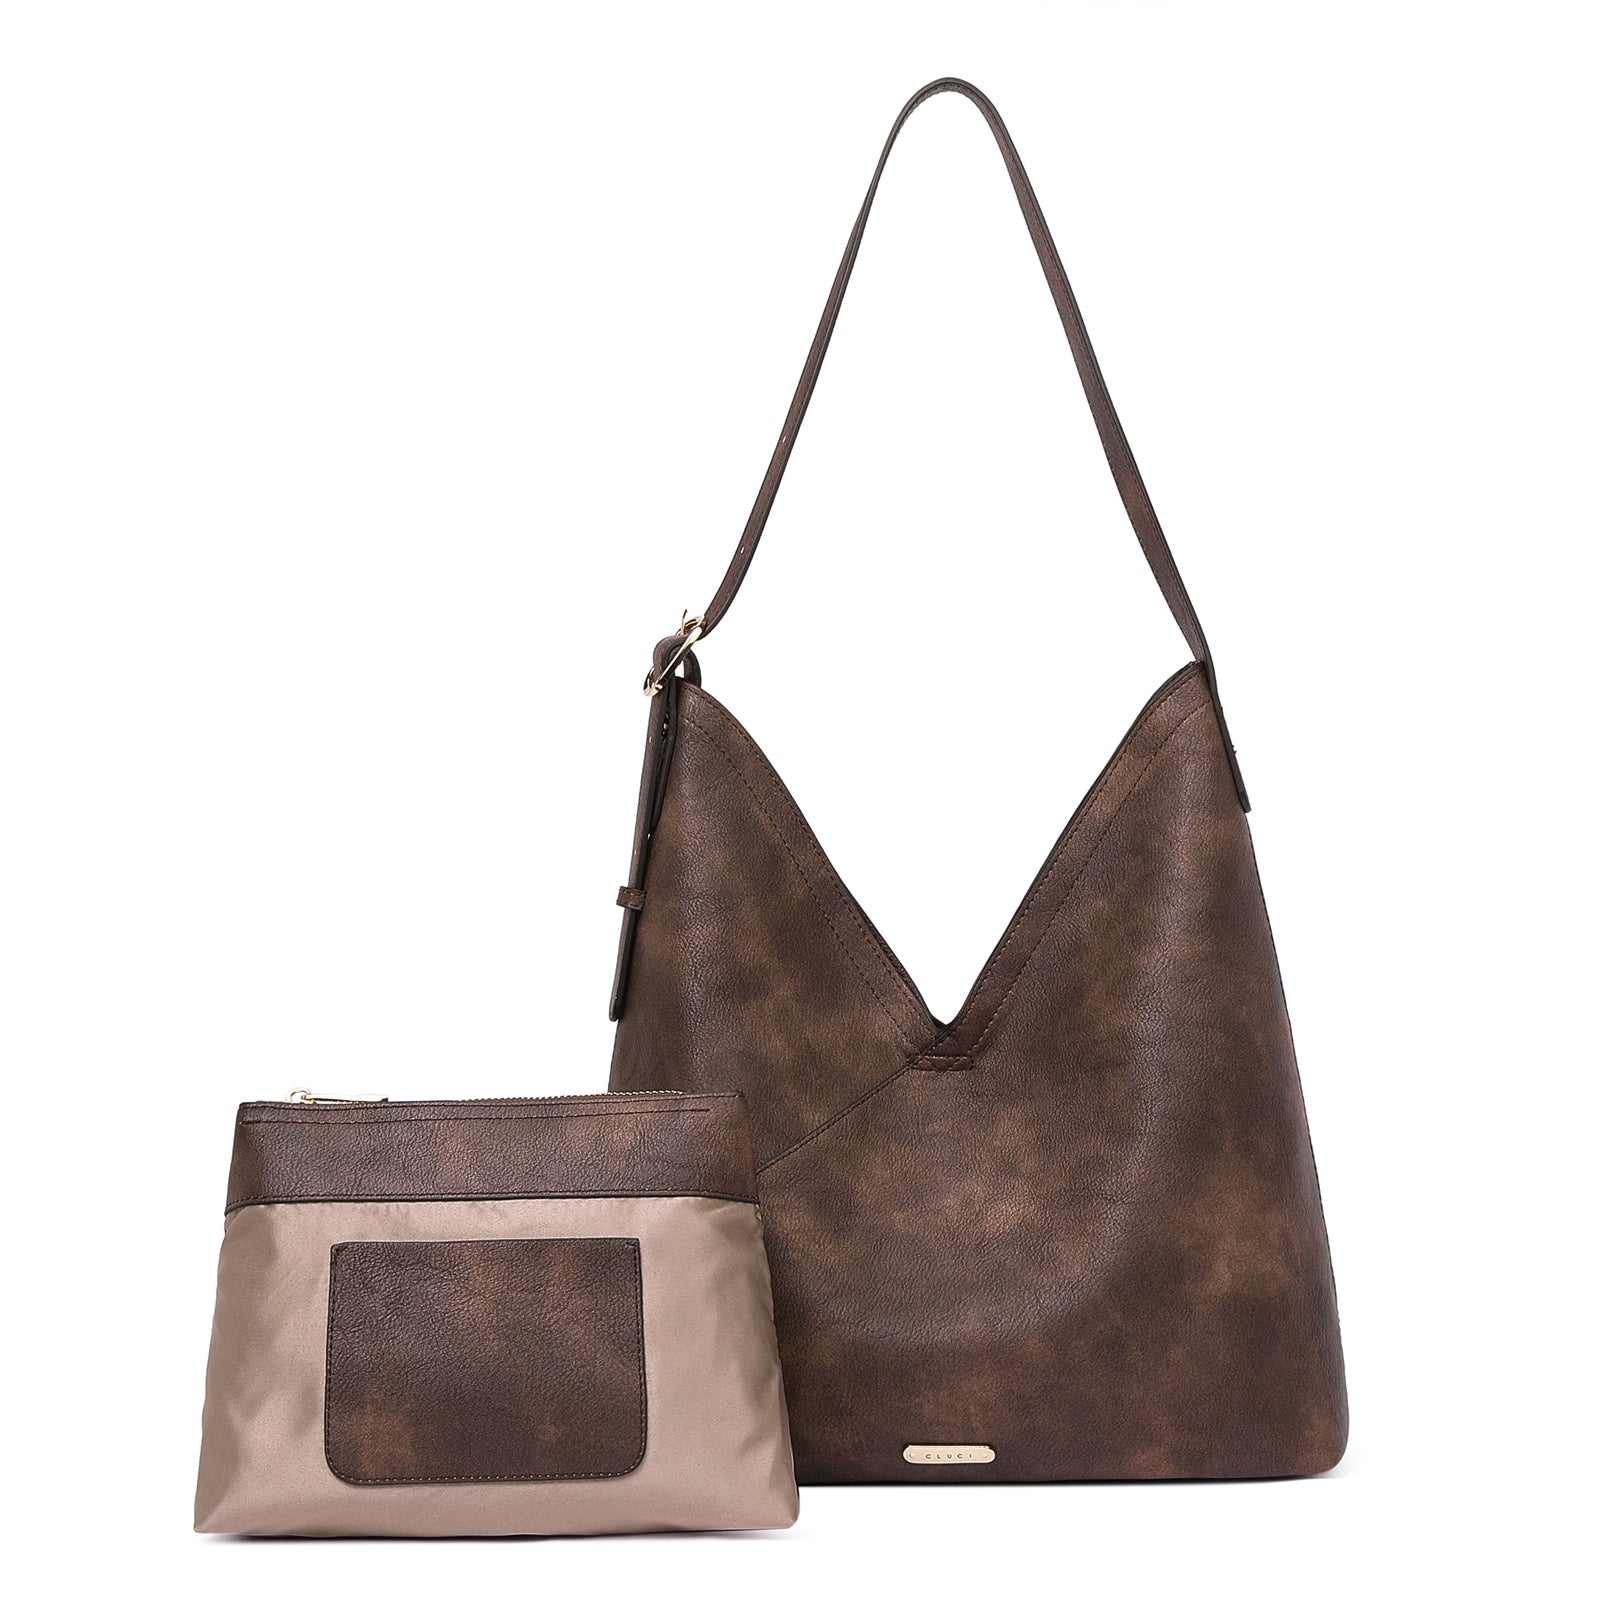 KITATU Crossbody Bag for Women Hobo Handbags - Vegan Leather Designer Purse Shoulder Zipper Bag with 2 Adjustable Straps